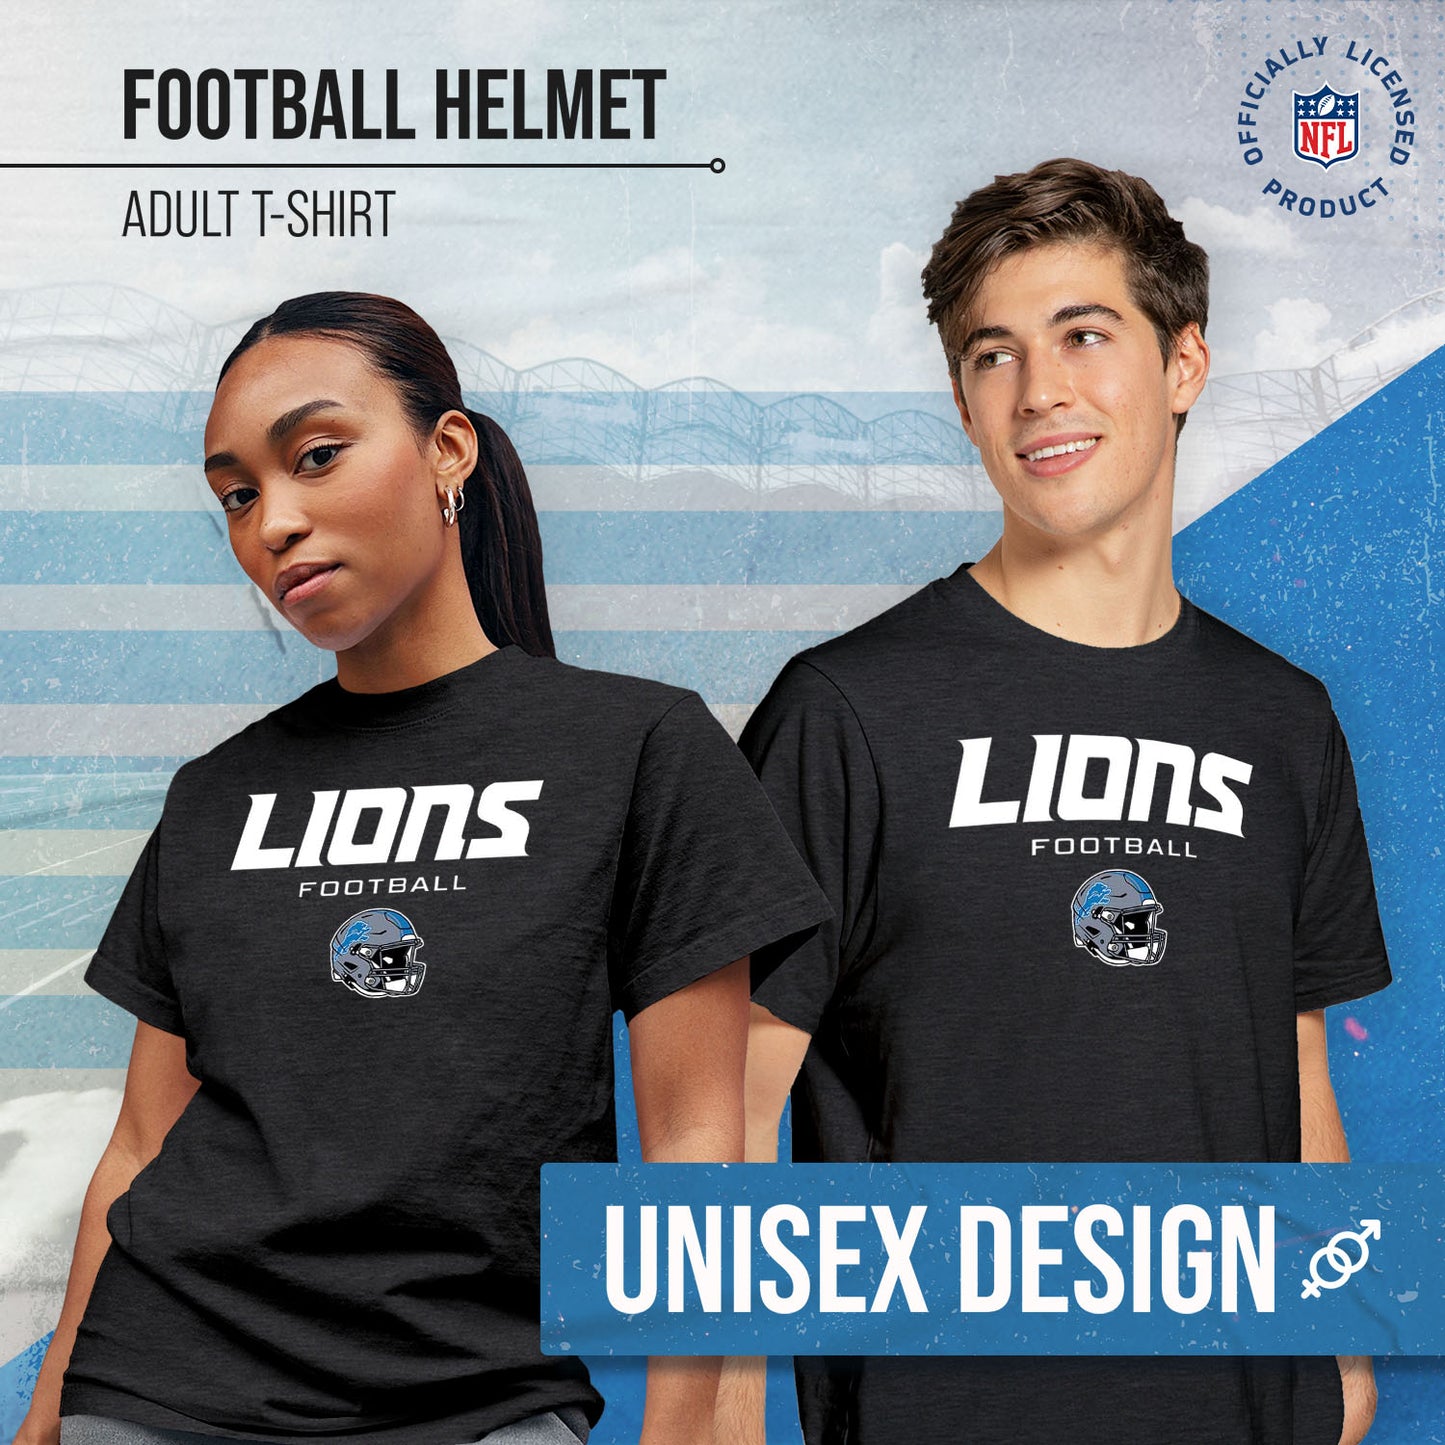 Detroit Lions NFL Adult Football Helmet Tagless T-Shirt - Charcoal